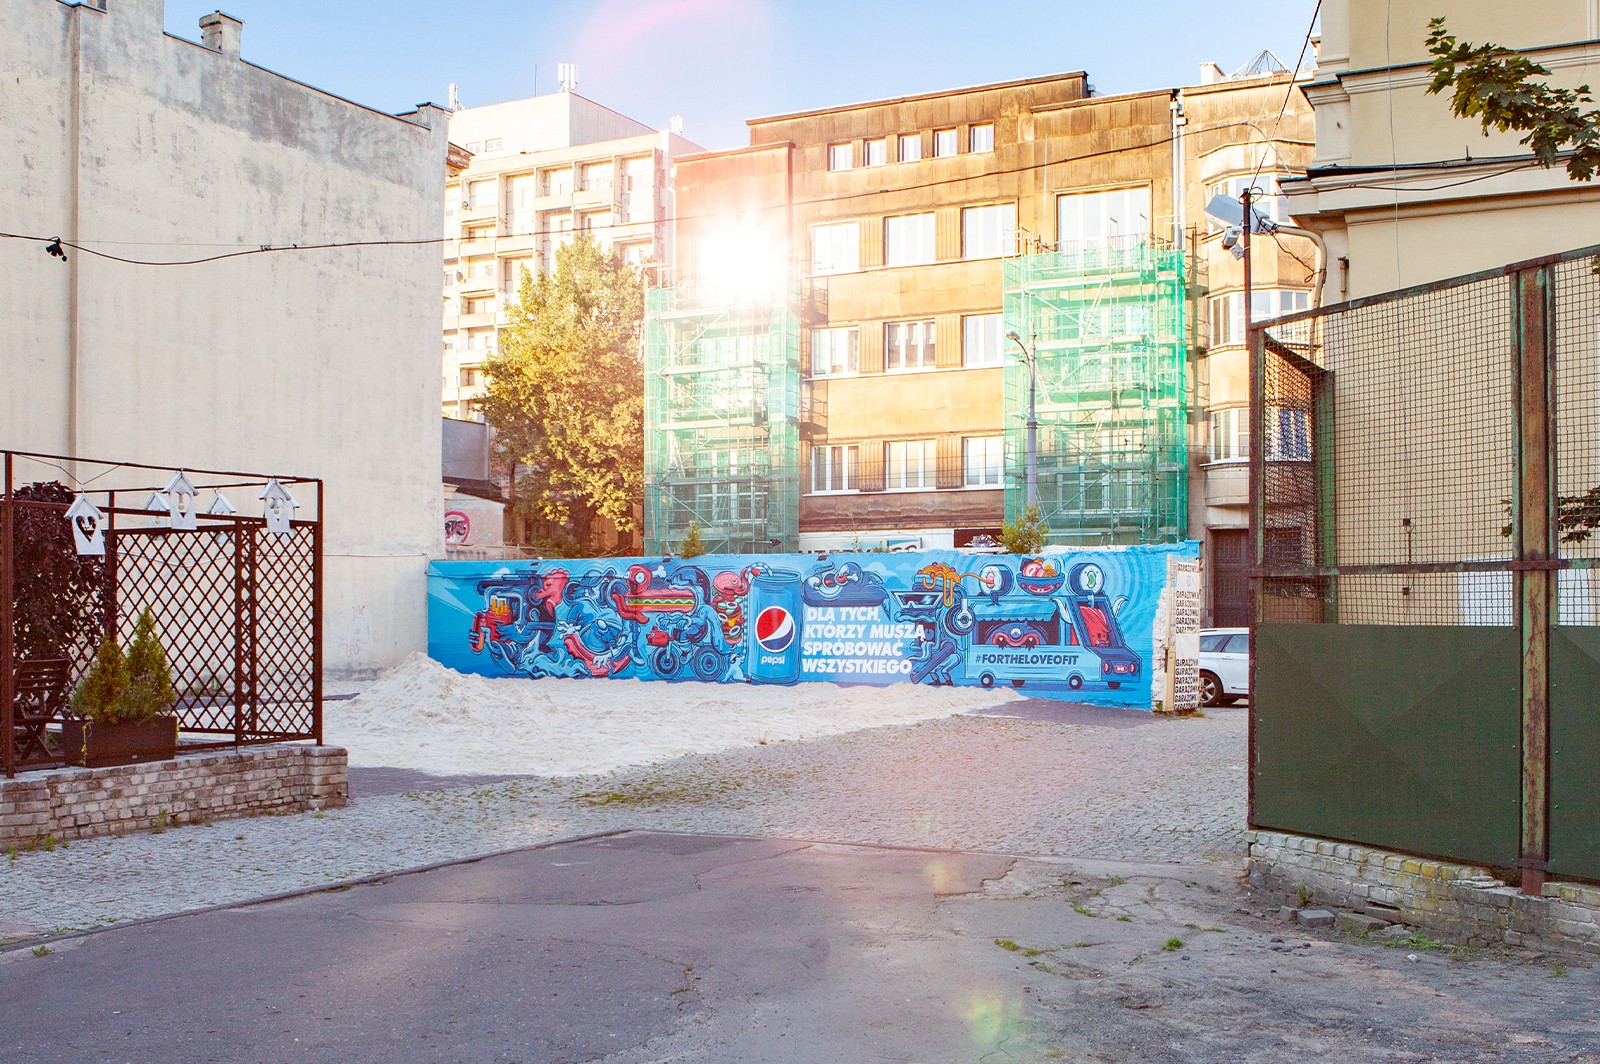 PepsiCo #fortheloveofit mural in Łodź | #FORTHELOVEOFIT | Portfolio